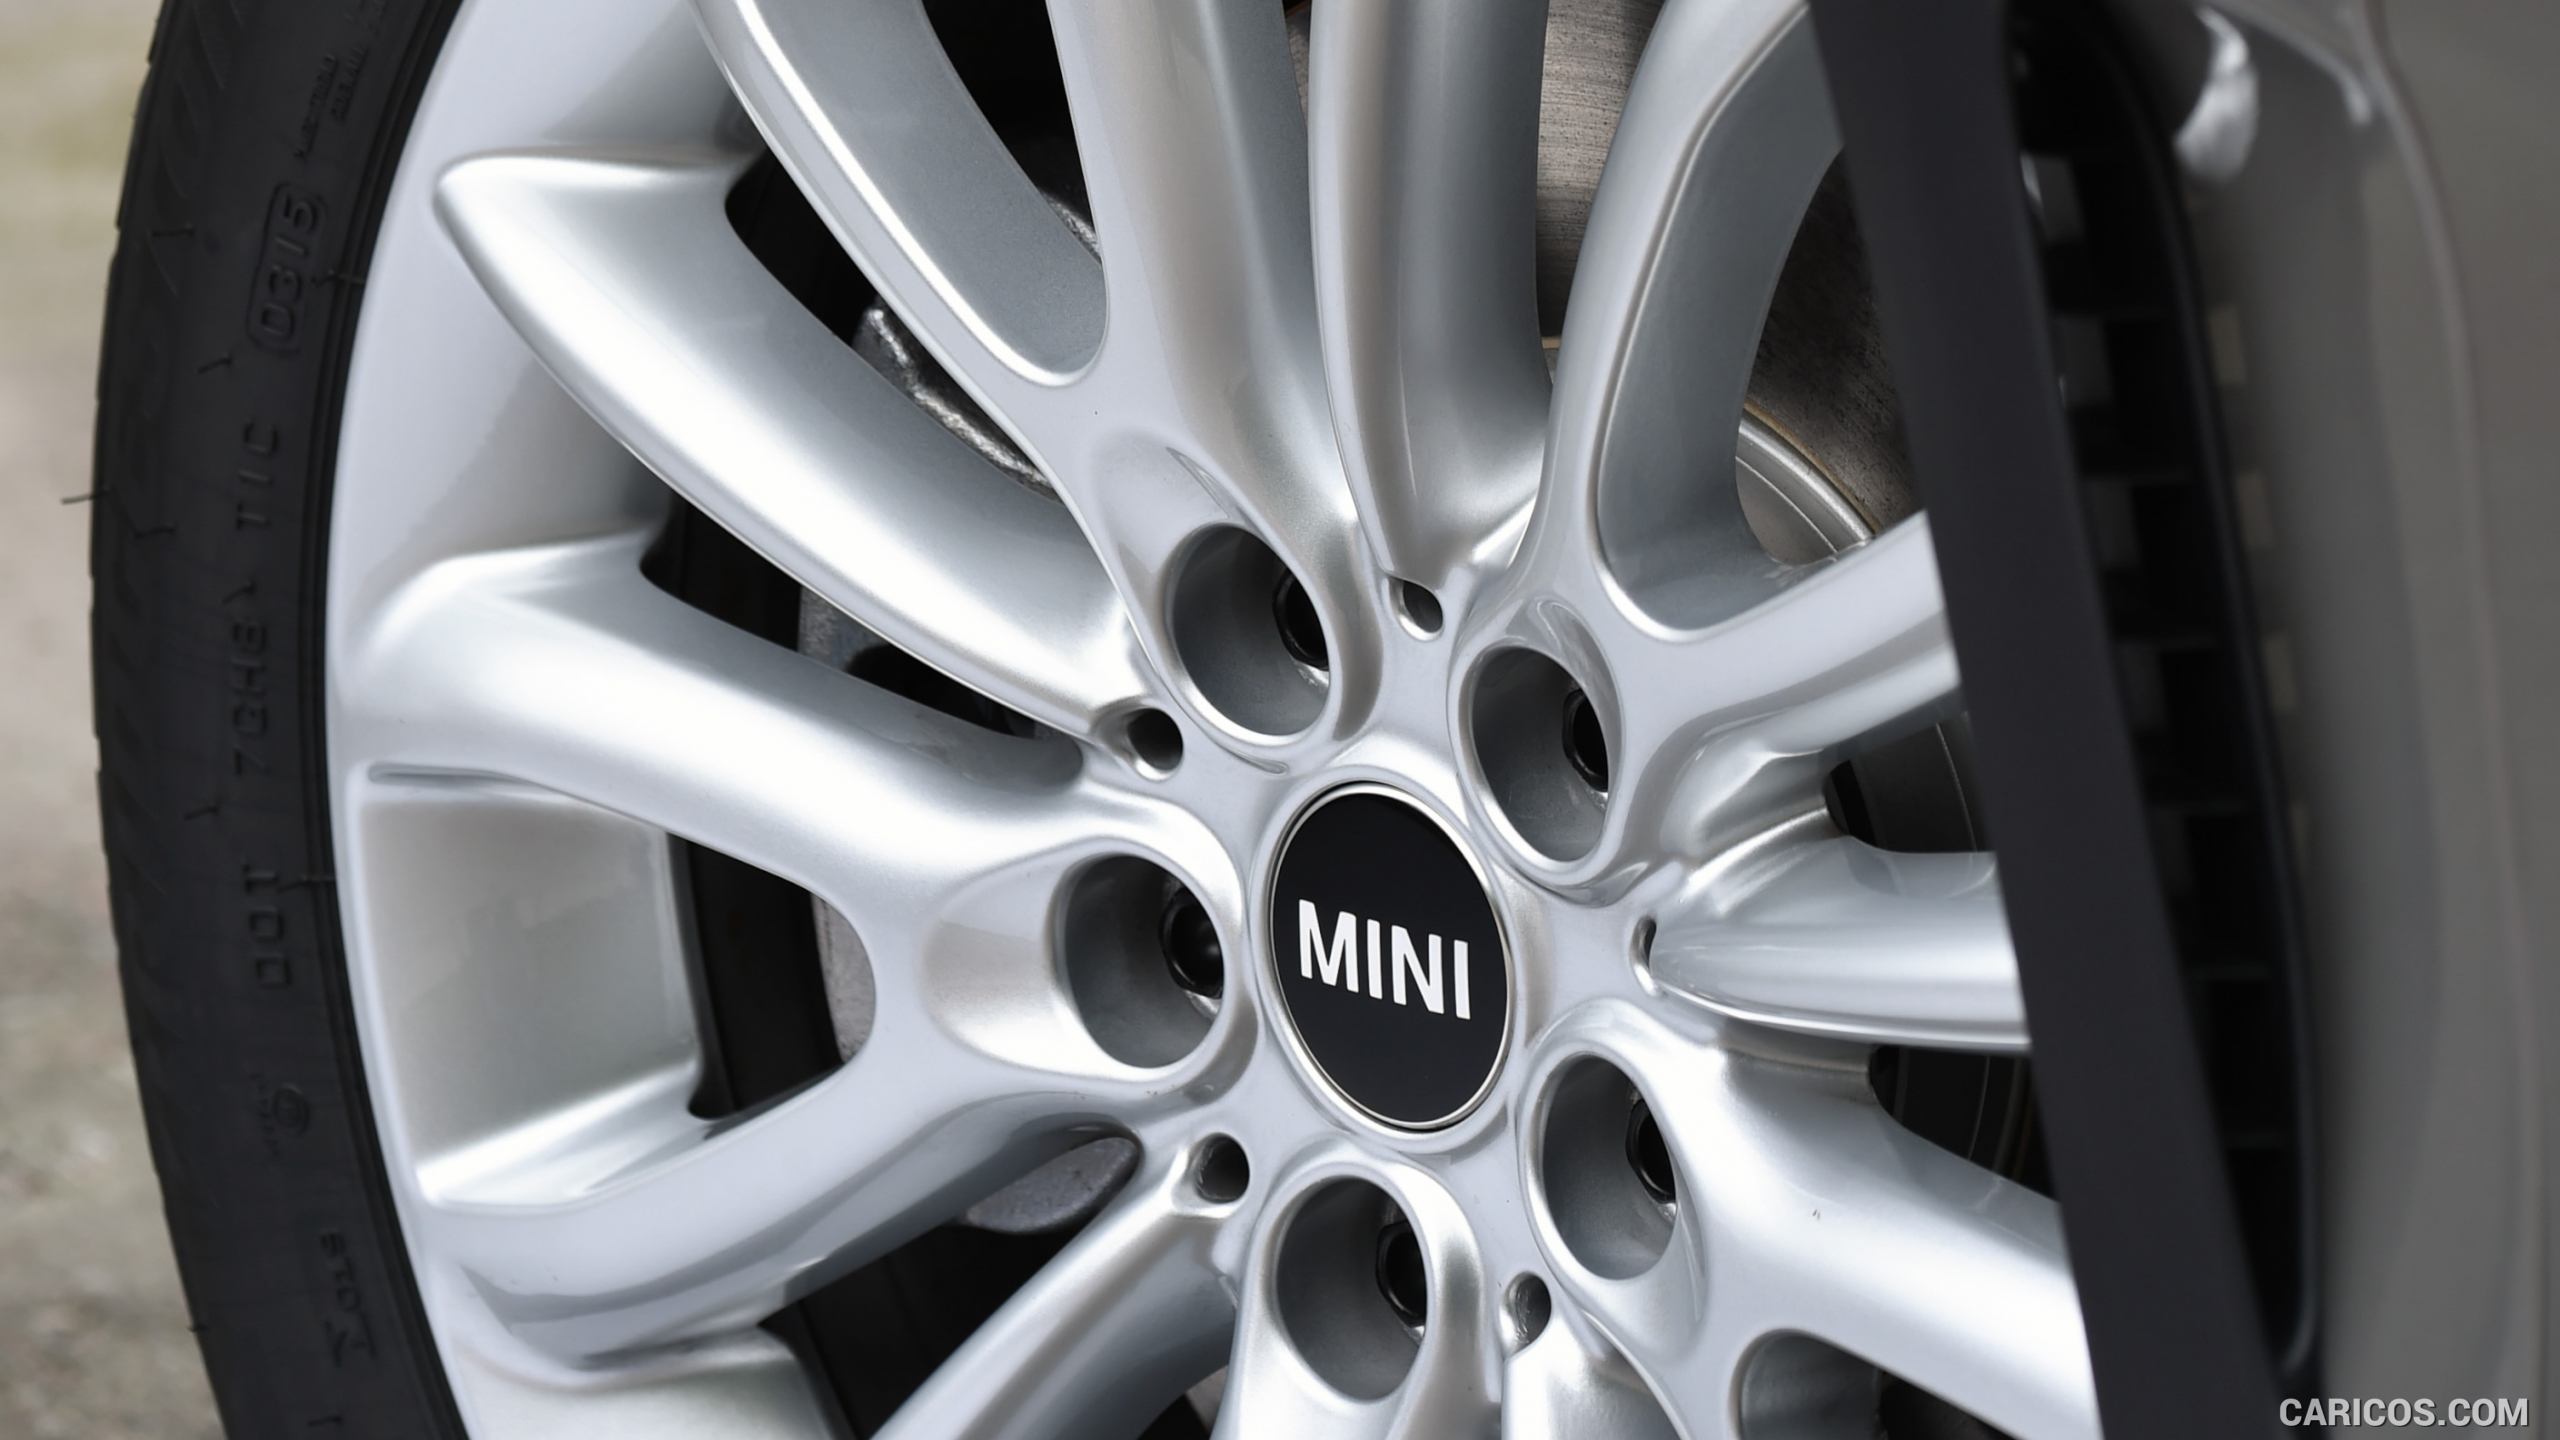 2016 MINI Cooper S Clubman in Metallic Melting Silver - Wheel, #207 of 380